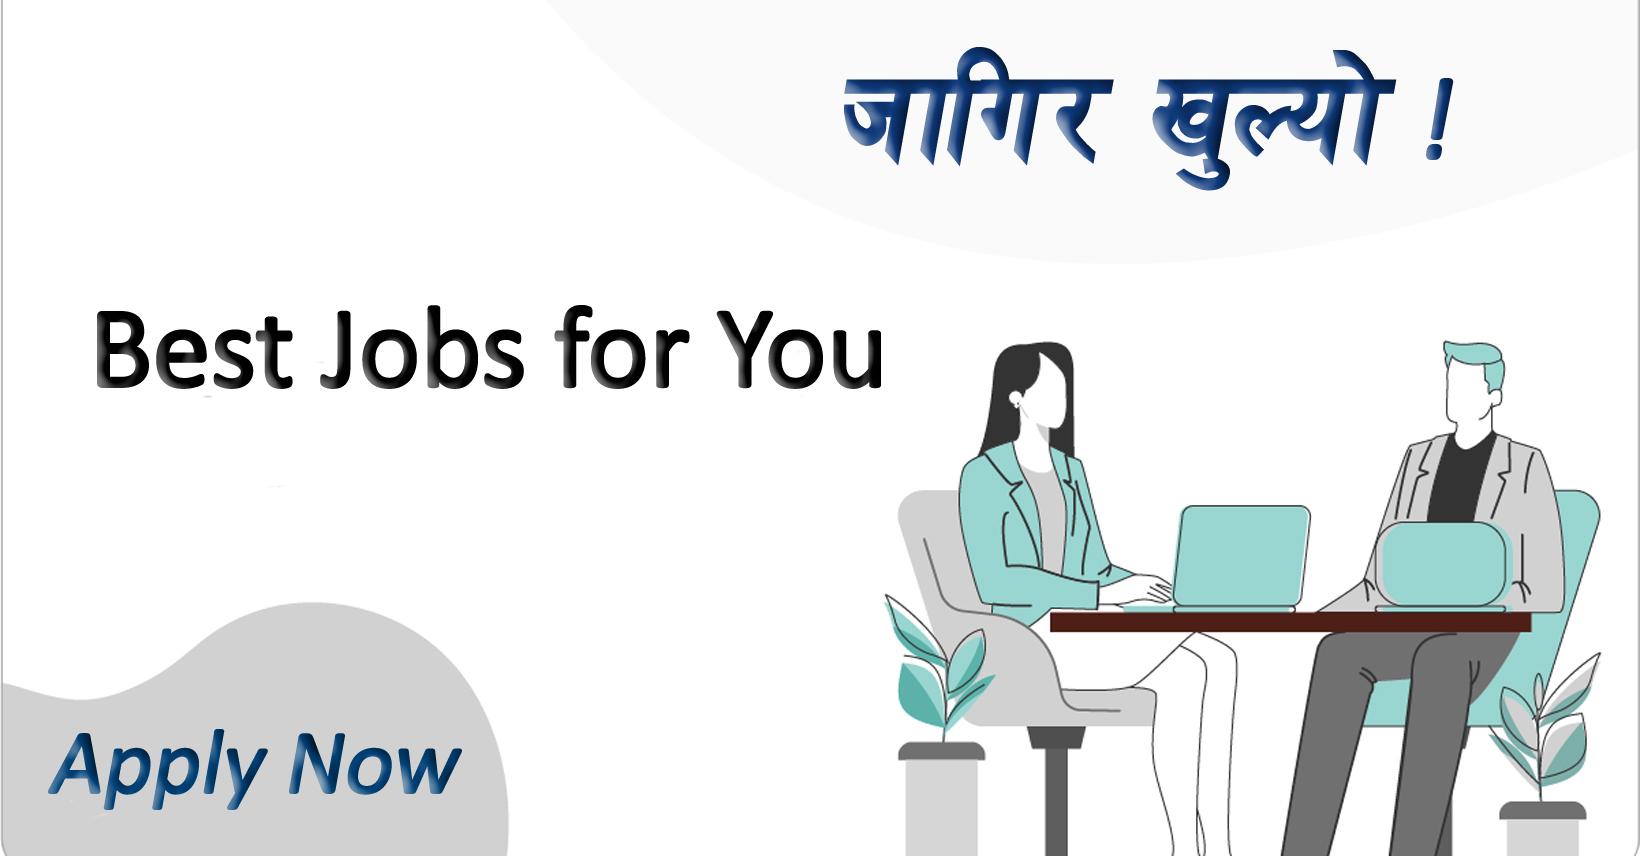 Jobs in Nepal - Job Vacancies in Nepal - Merorojgari